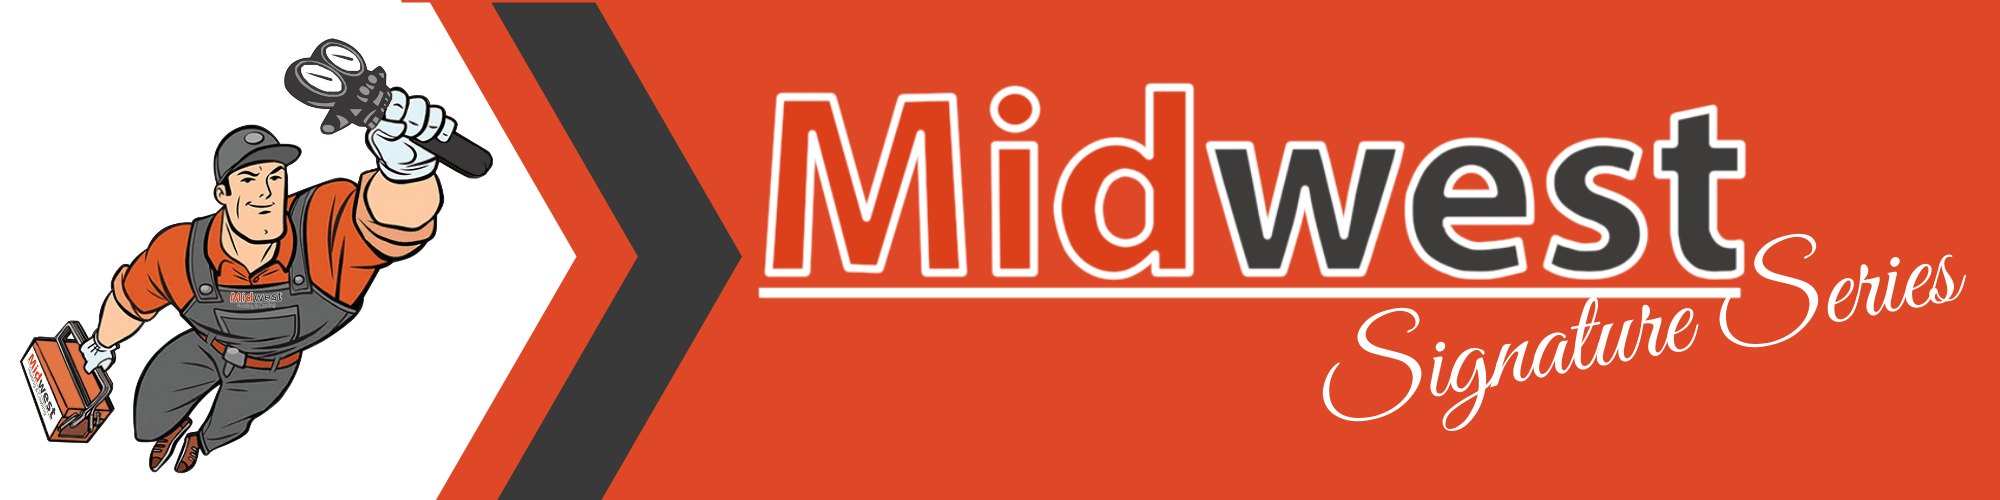 Midwest Signature Series Logo